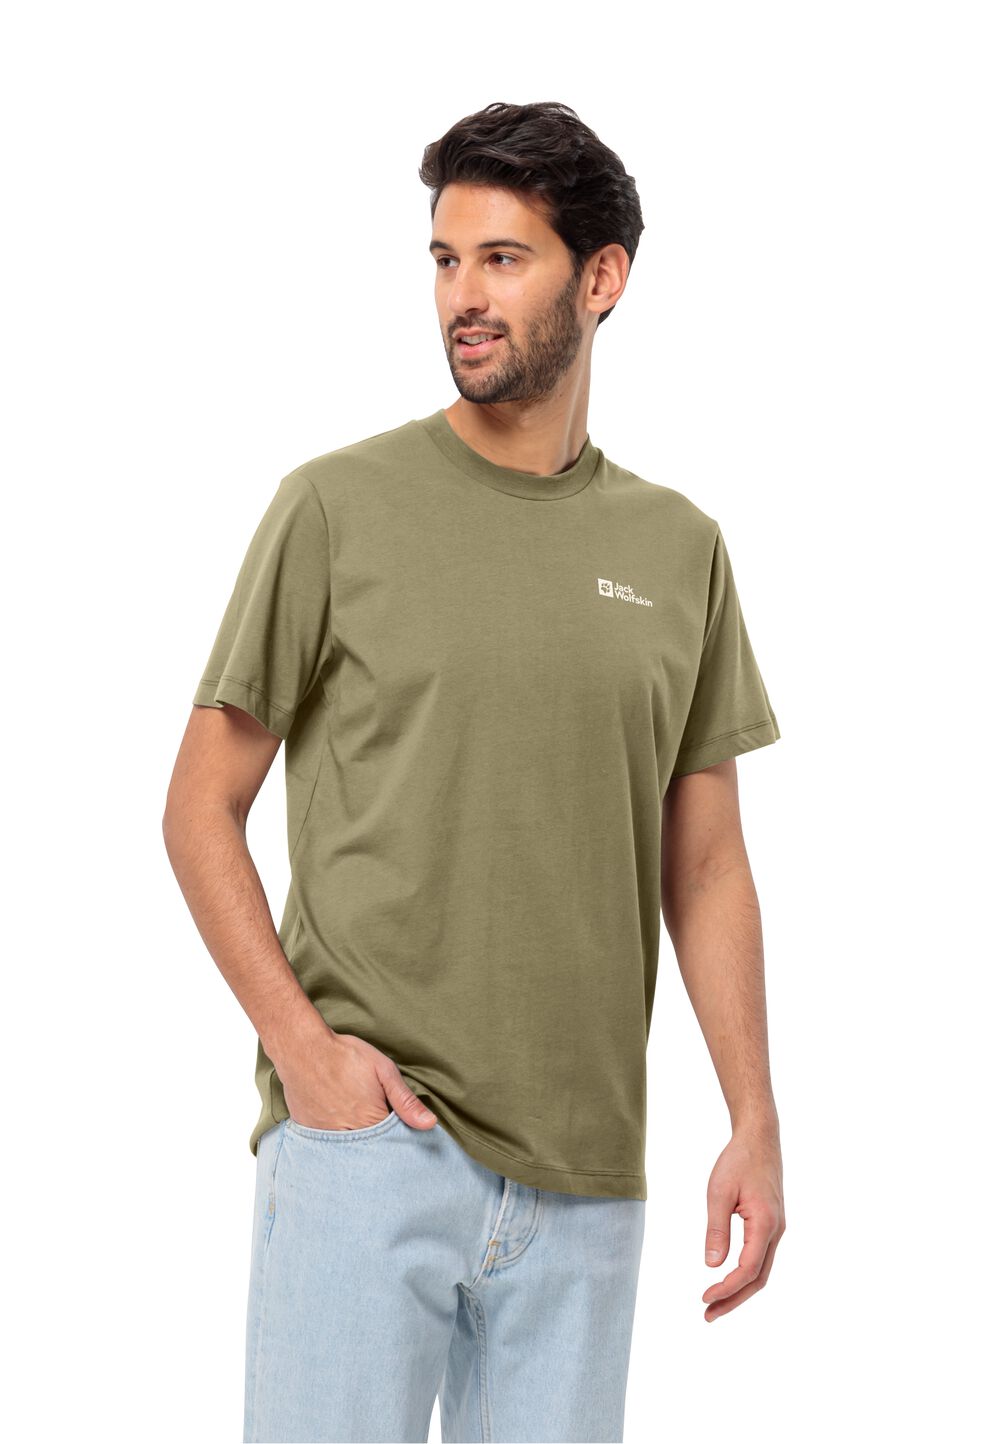 Jack Wolfskin Essential T-Shirt Men Heren T-shirt van biologisch katoen L bruin bay leaf